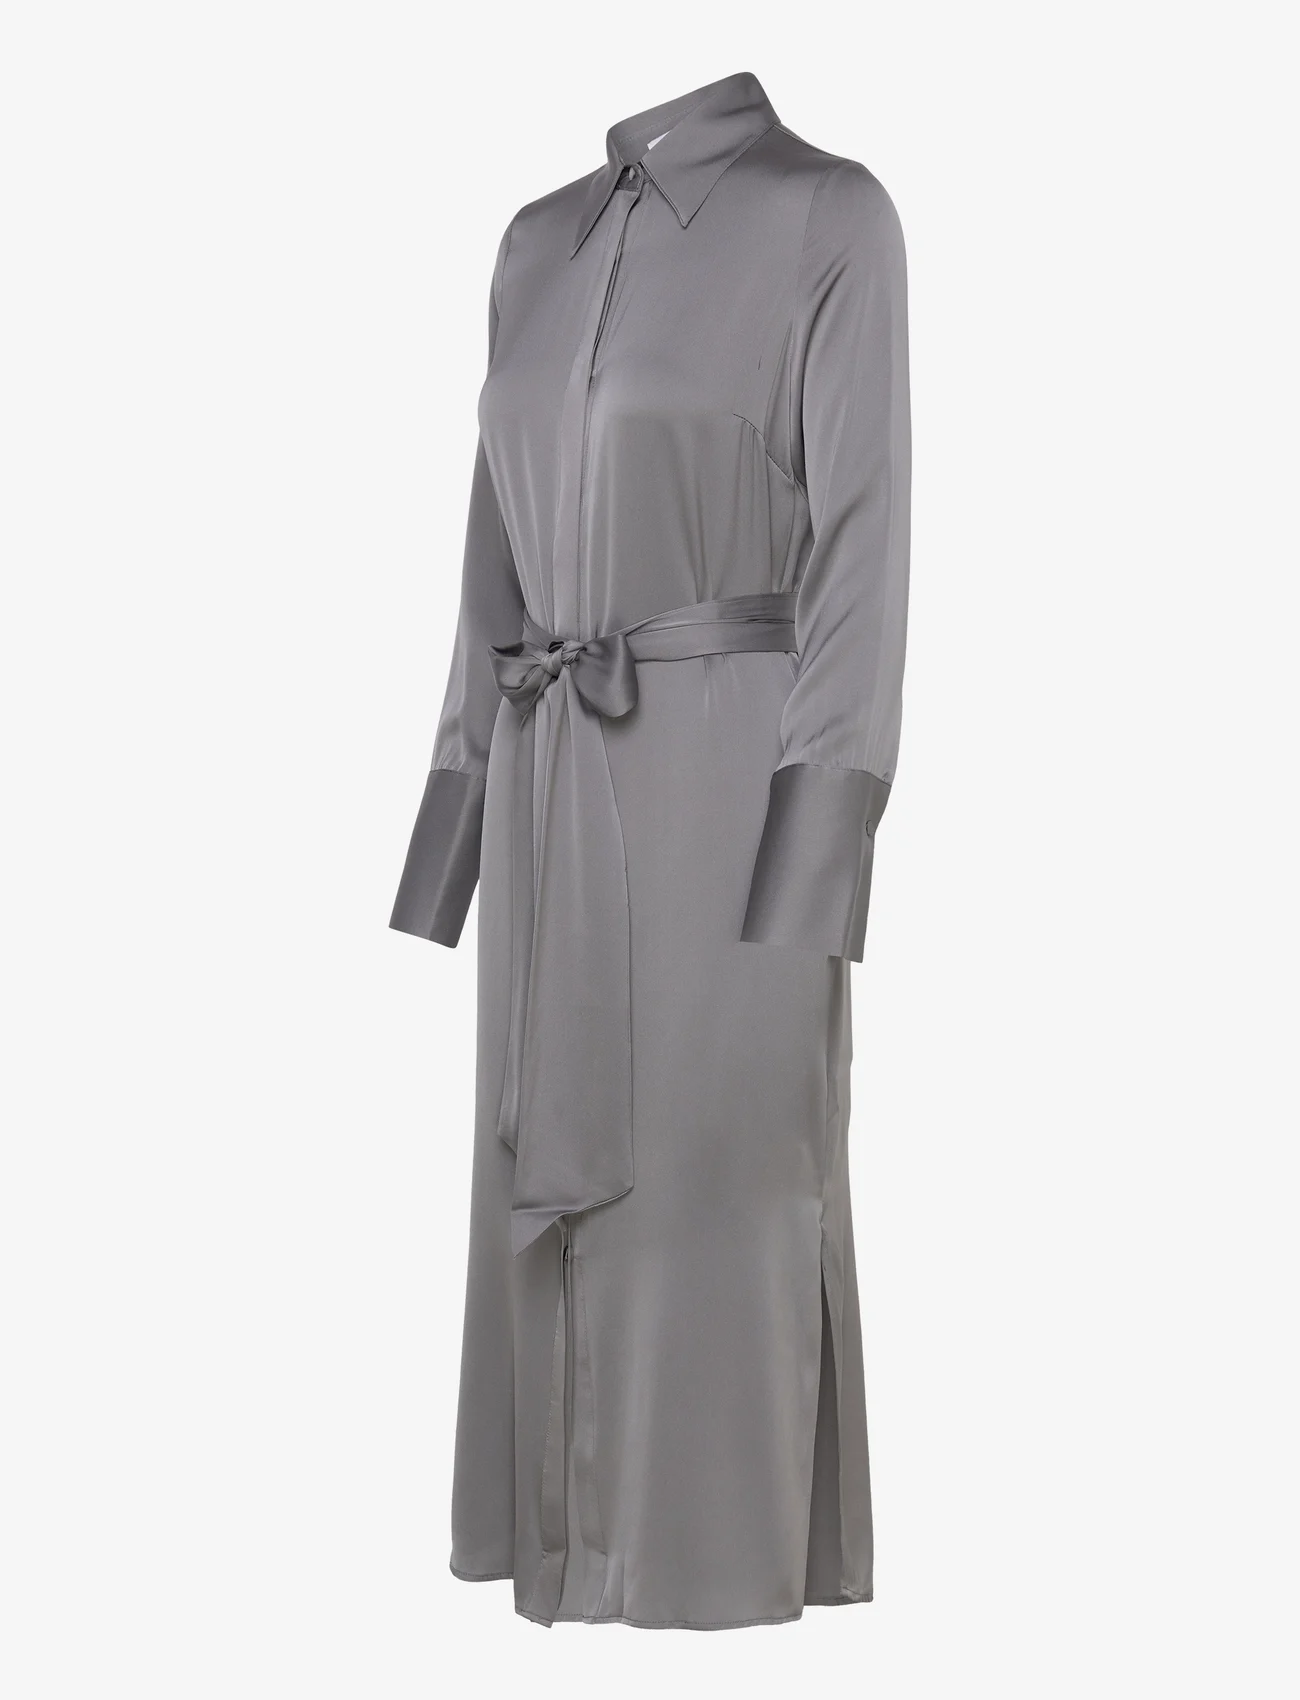 Marville Road - Electra Silk Dress - shirt dresses - dark grey - 1